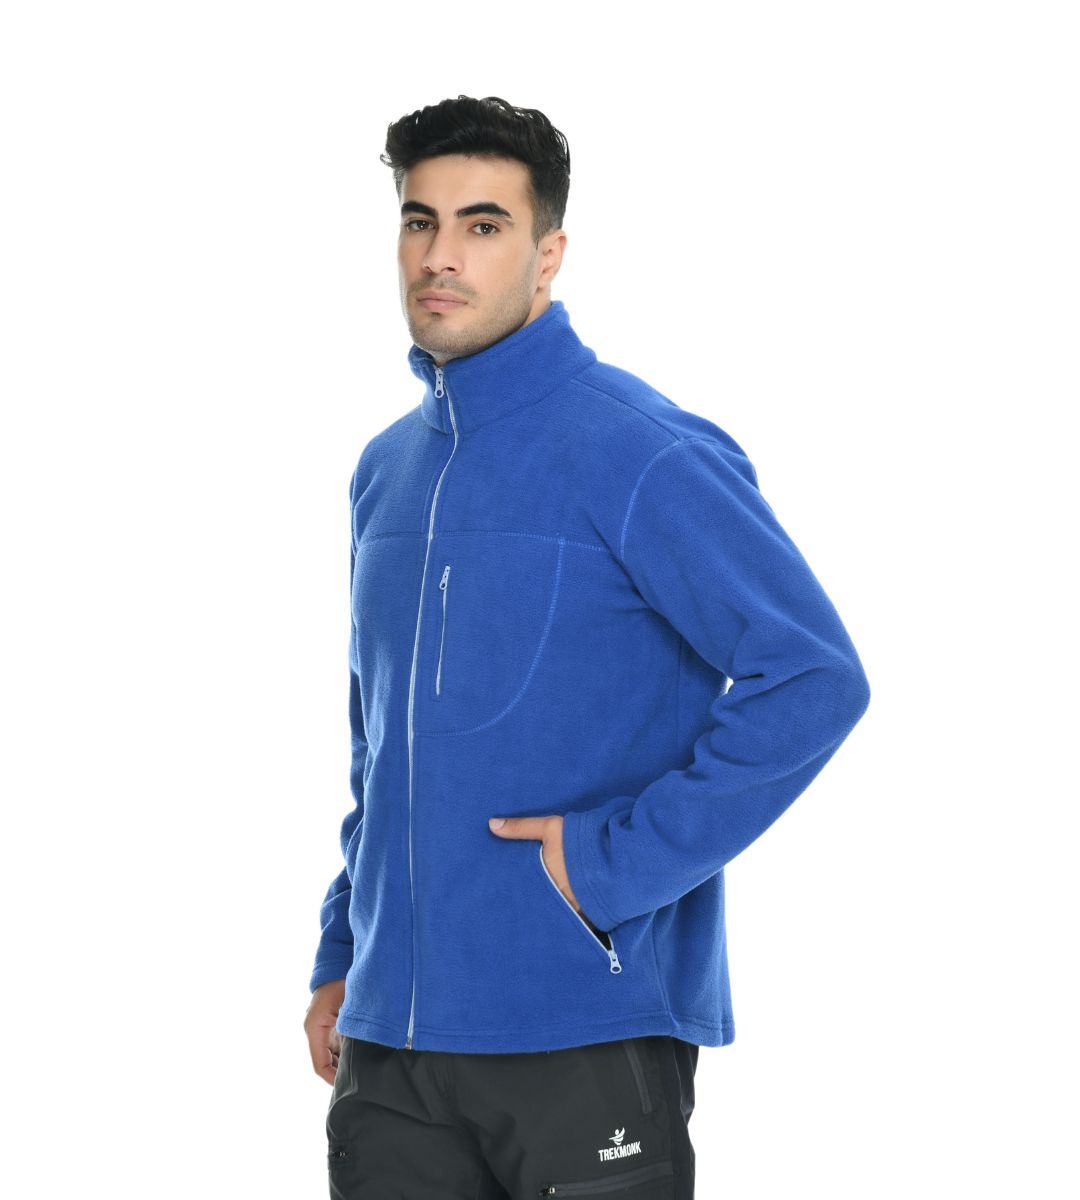 Men's Winter Fleece Jackets